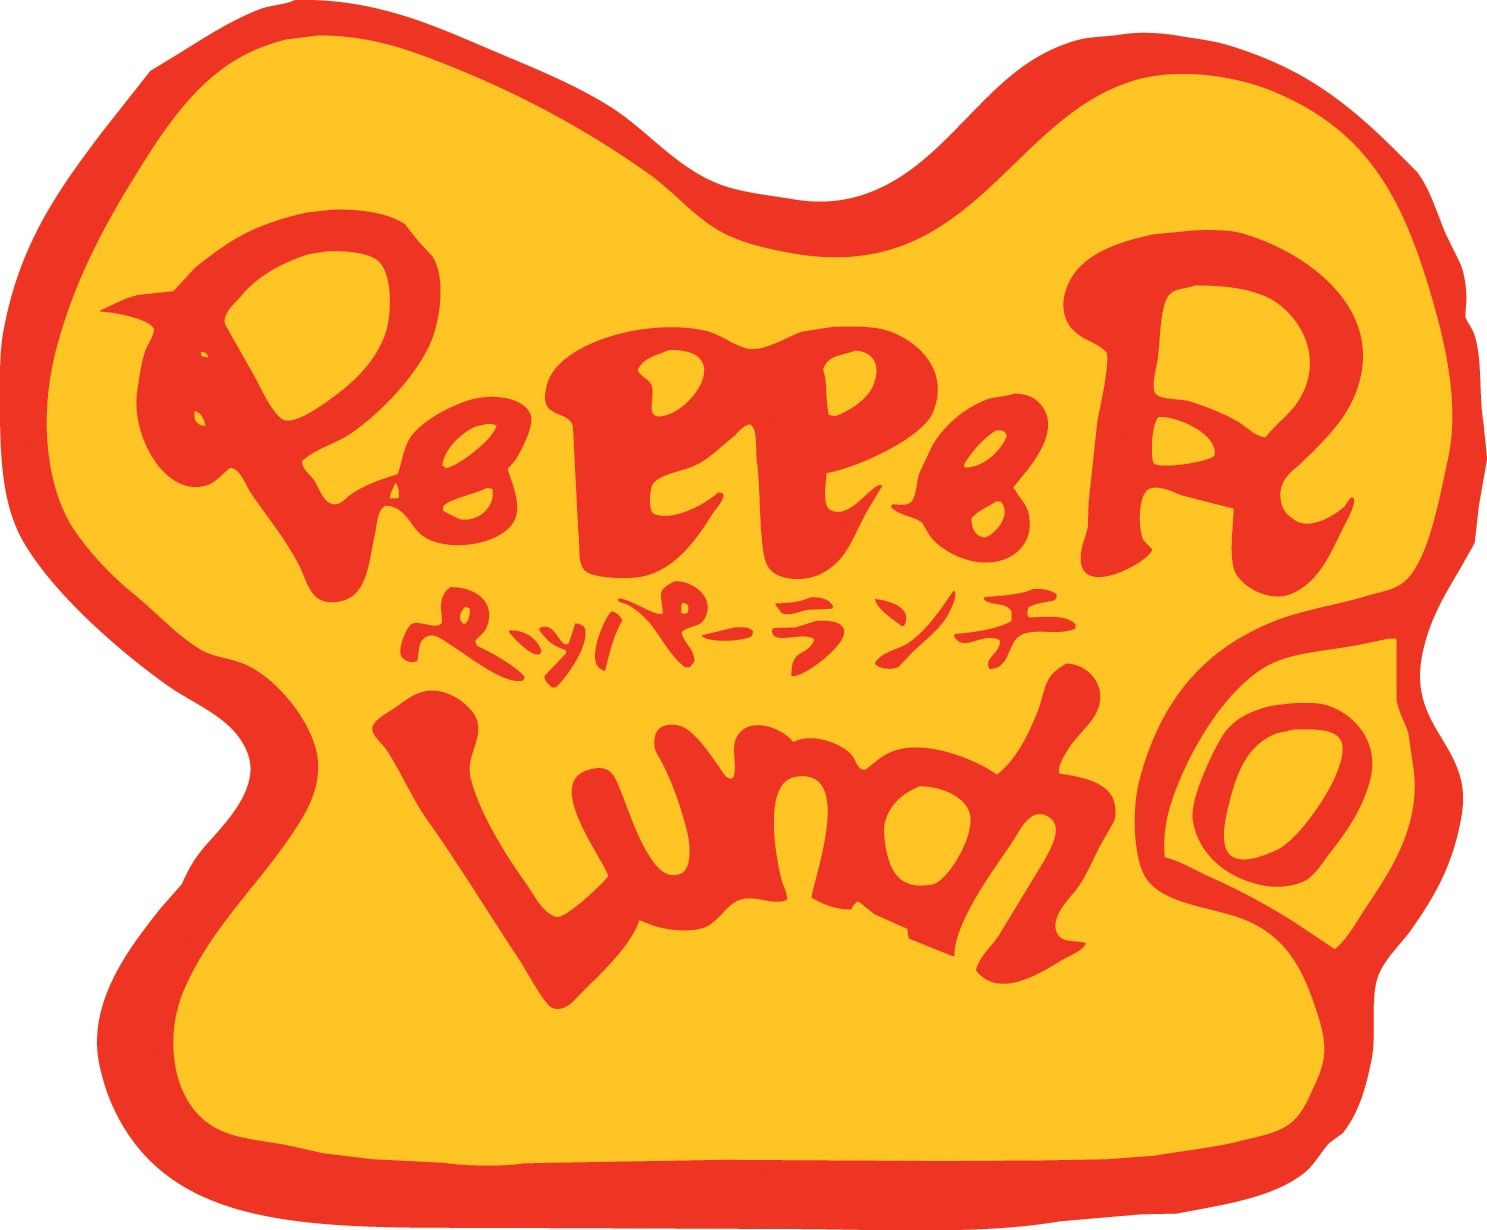 Pepper Lunch Canada (No. 3 Rd)